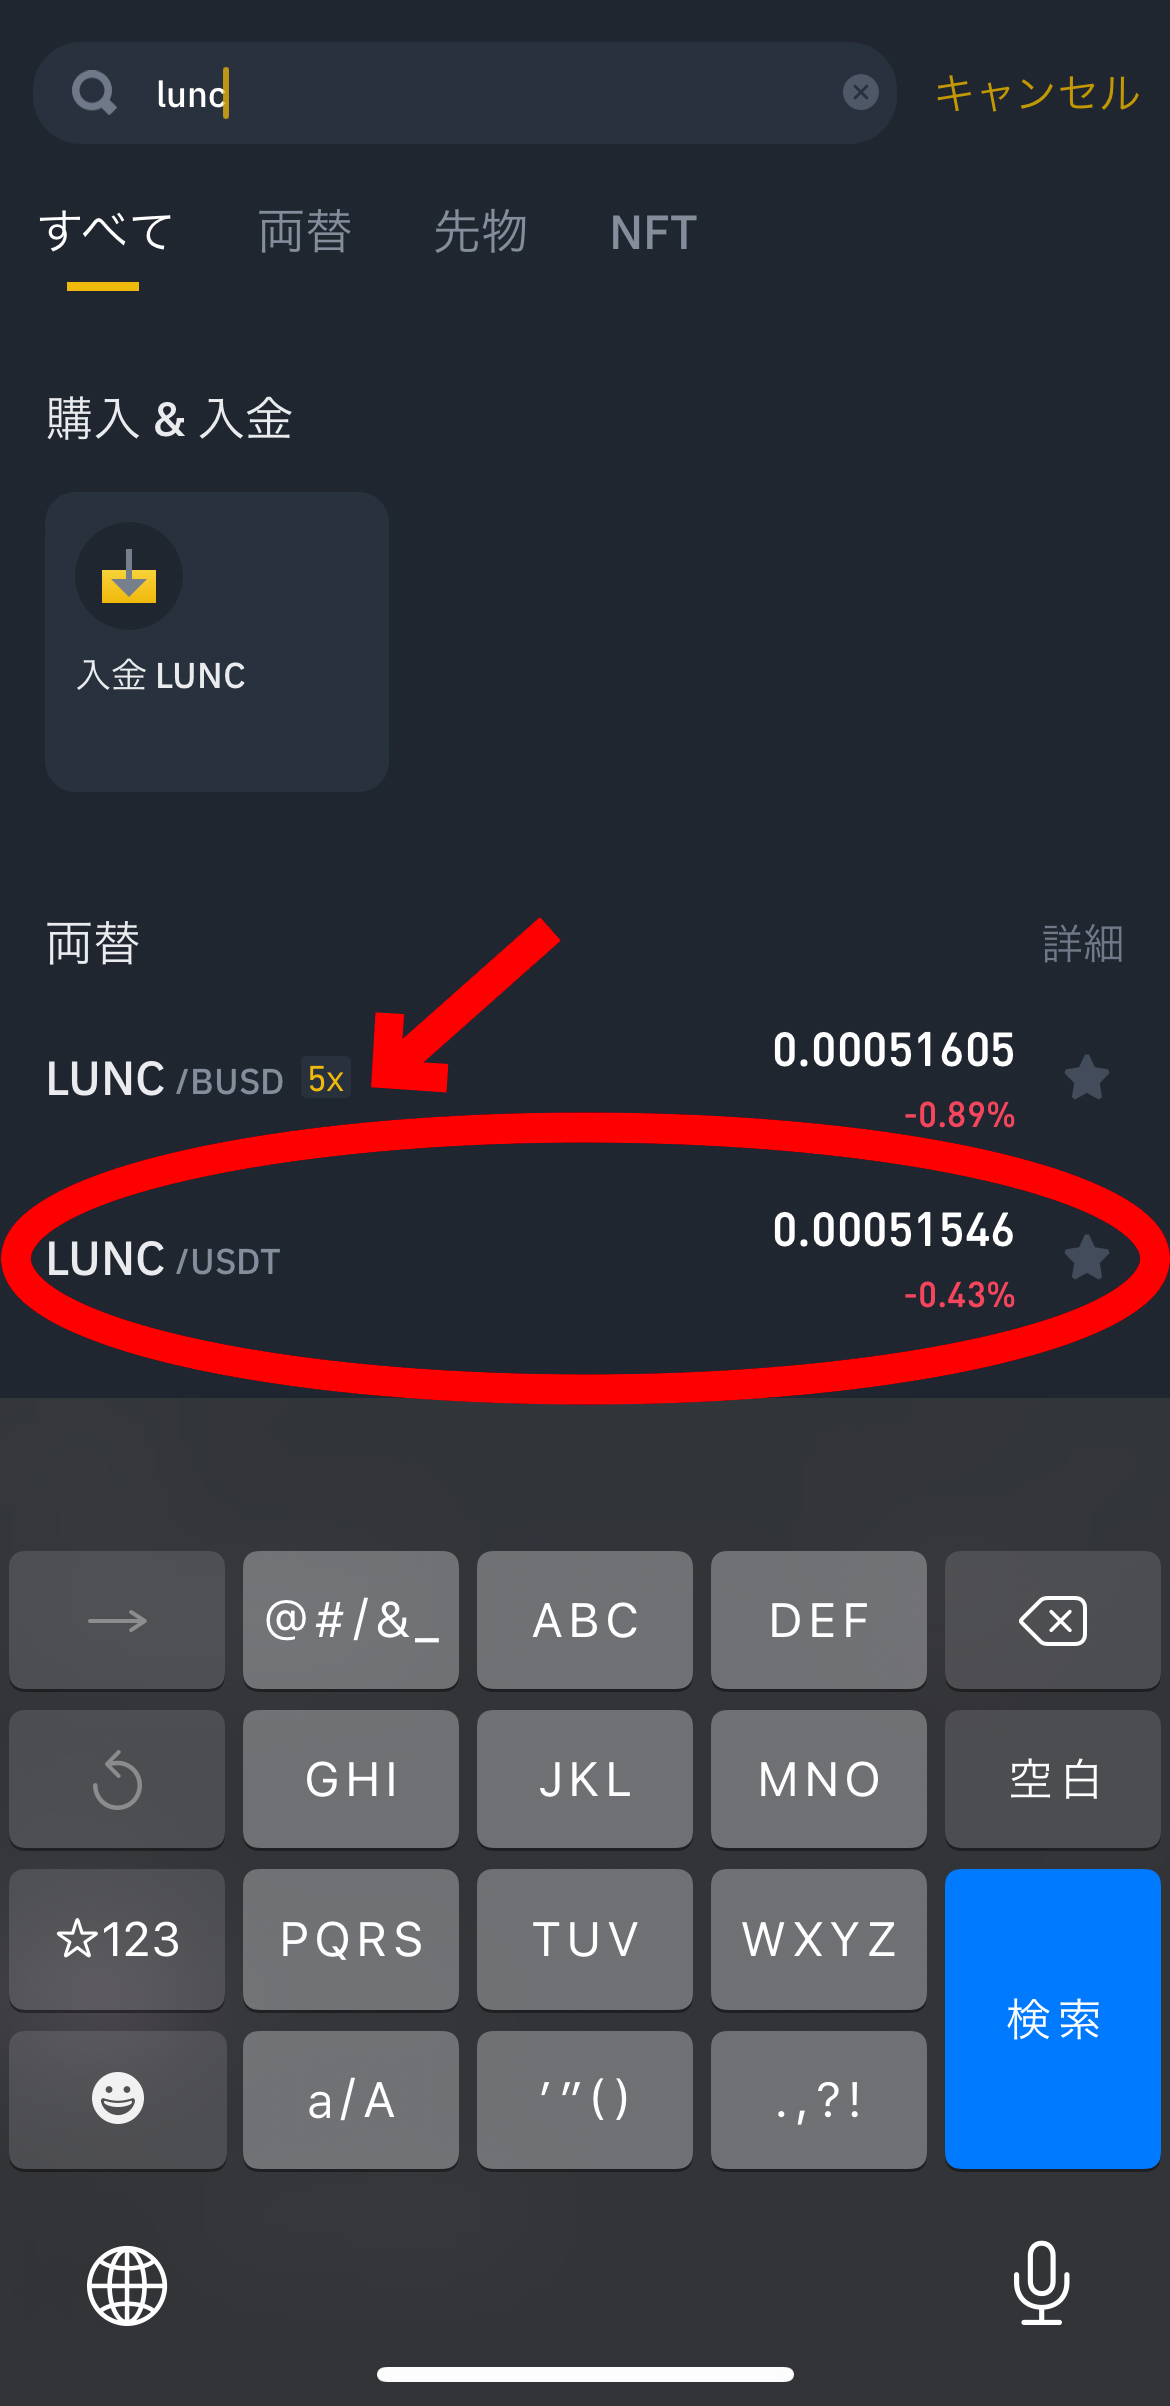 LUNCの買い方【スマホで簡単】【バイナンス】【コインチェック】【LUNA】下の買いを選択します。